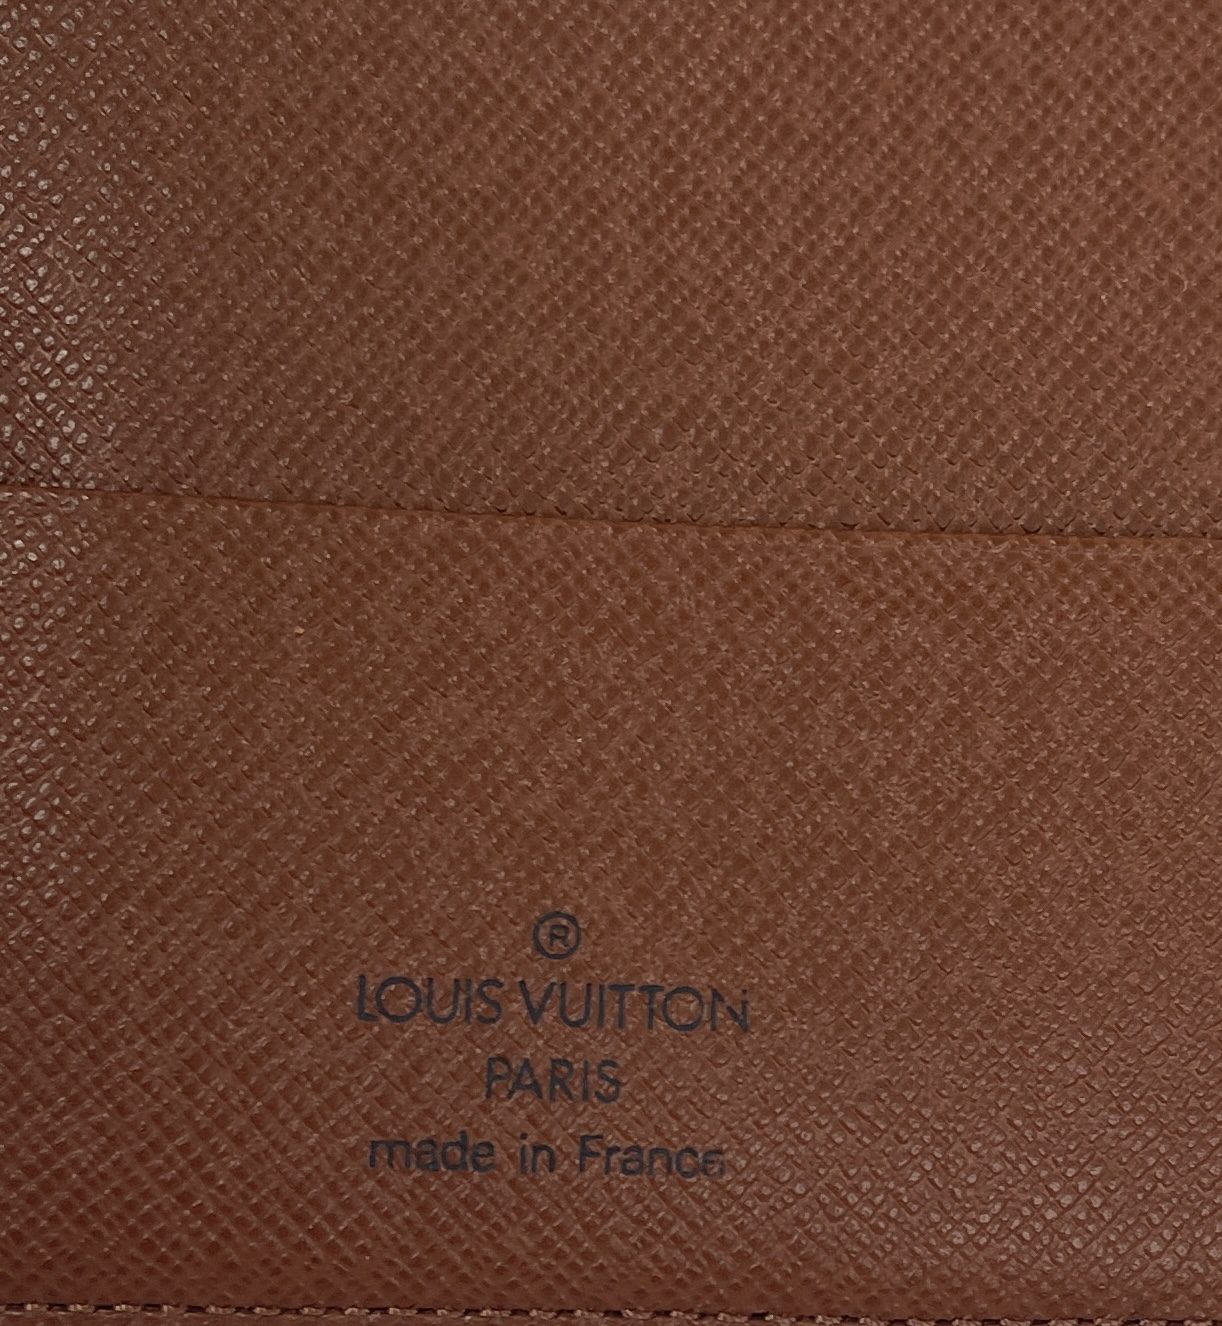 Louis Vuitton Passport Cover Monogram Eclipse Black/Grey in Toile